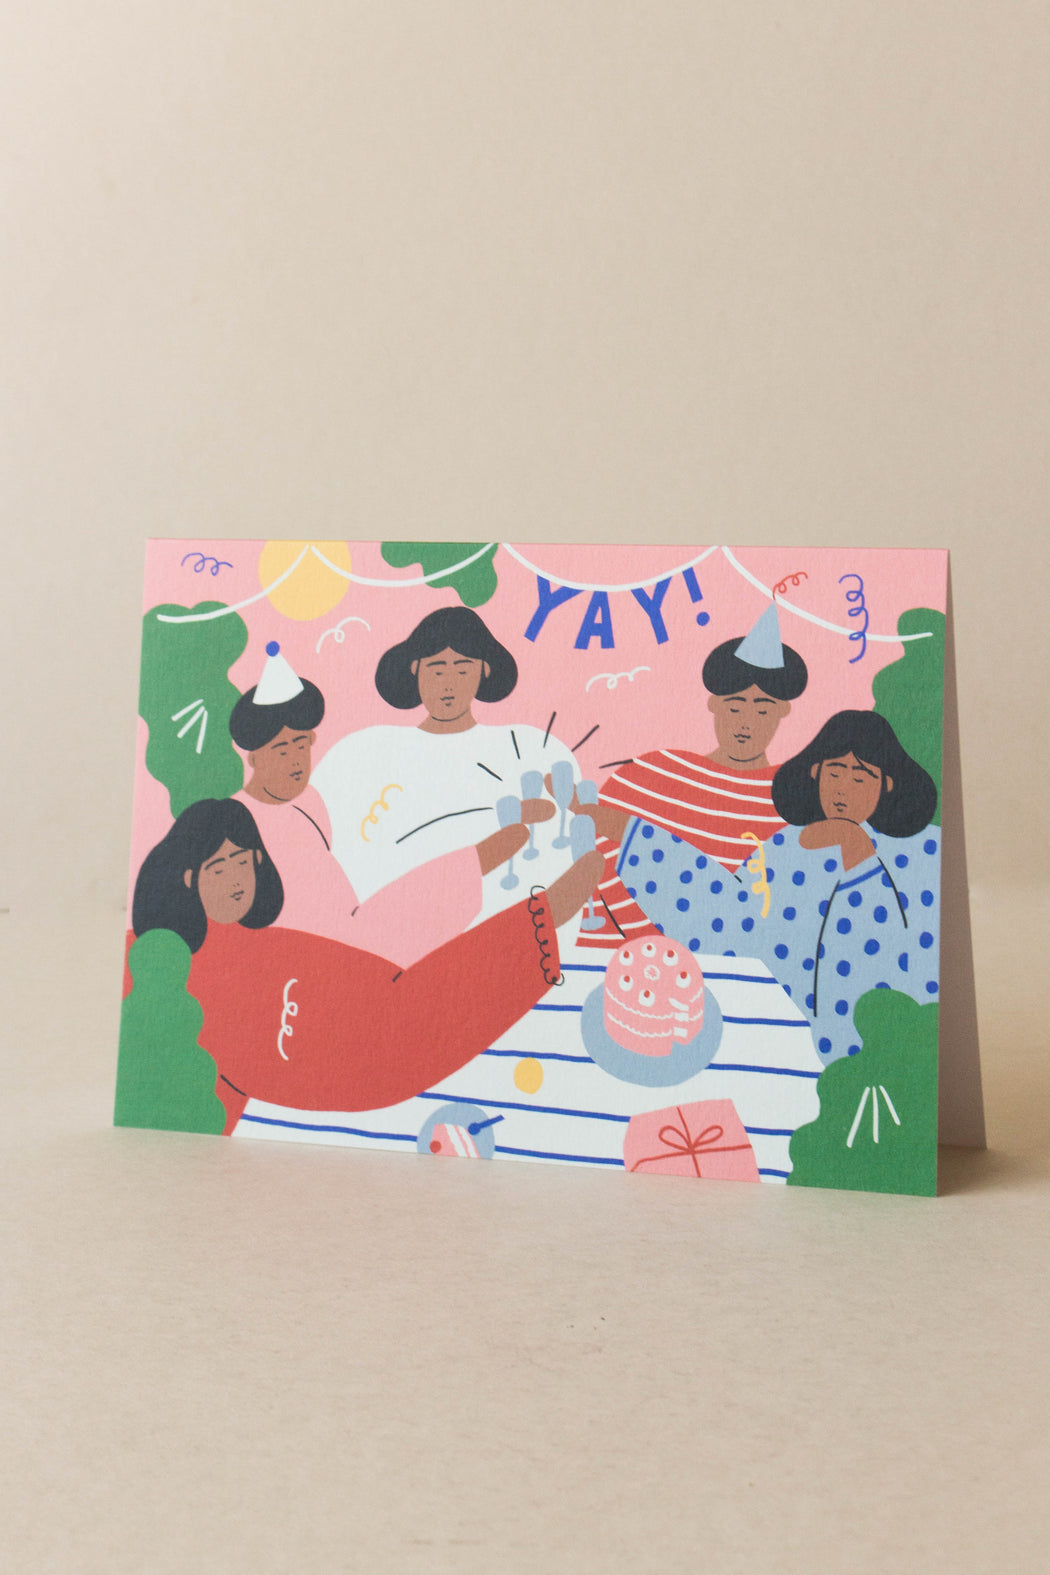 Wrap - 'Yay' Art Card